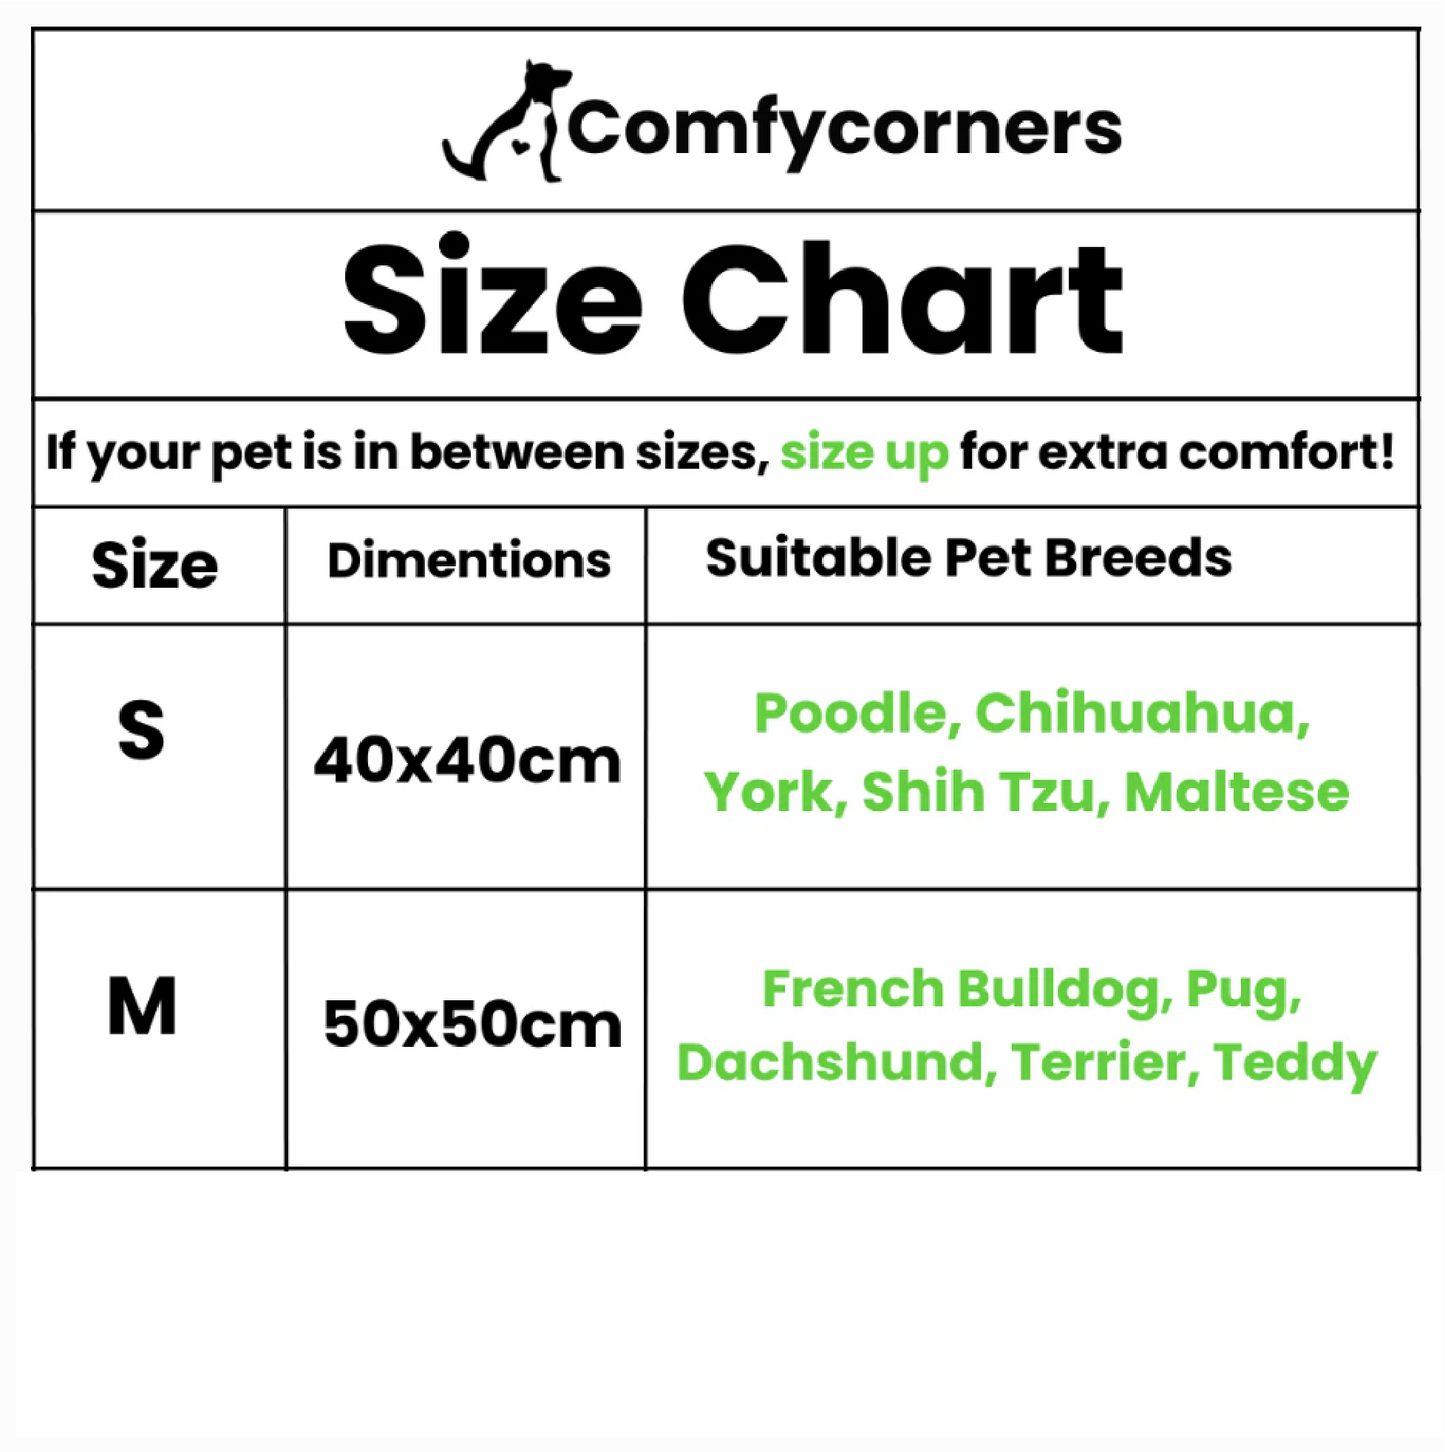 ComfyCorners Deluxe Pet Bed - QZ Pets